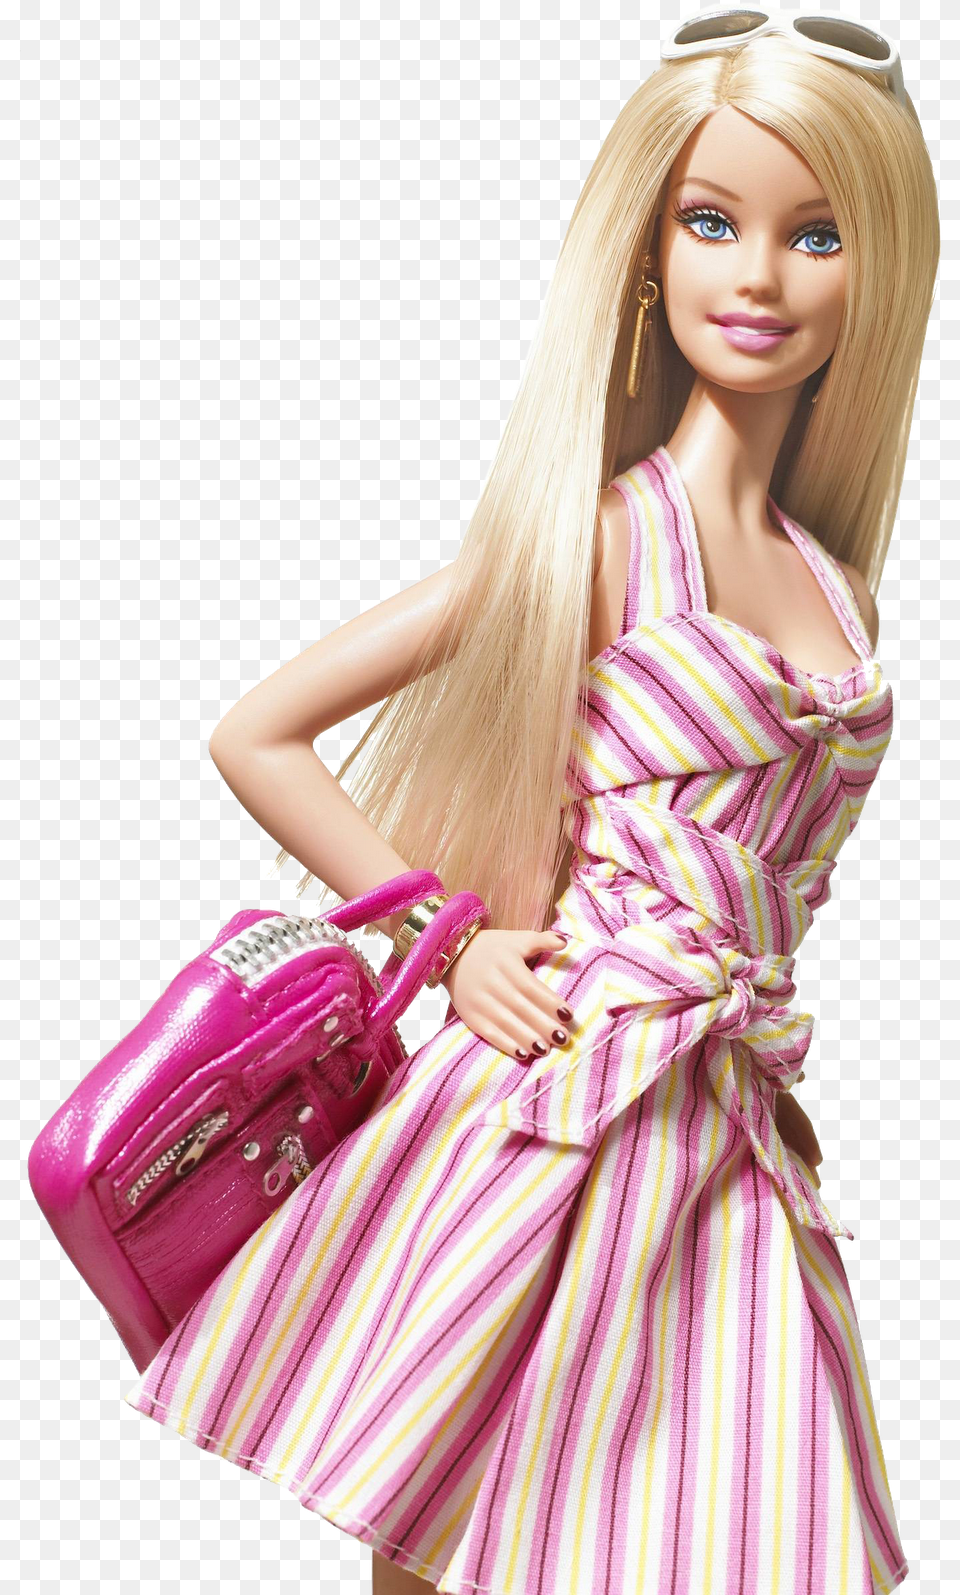 Barbie Doll Transparent Images Transparent Background Barbie, Accessories, Toy, Handbag, Figurine Free Png